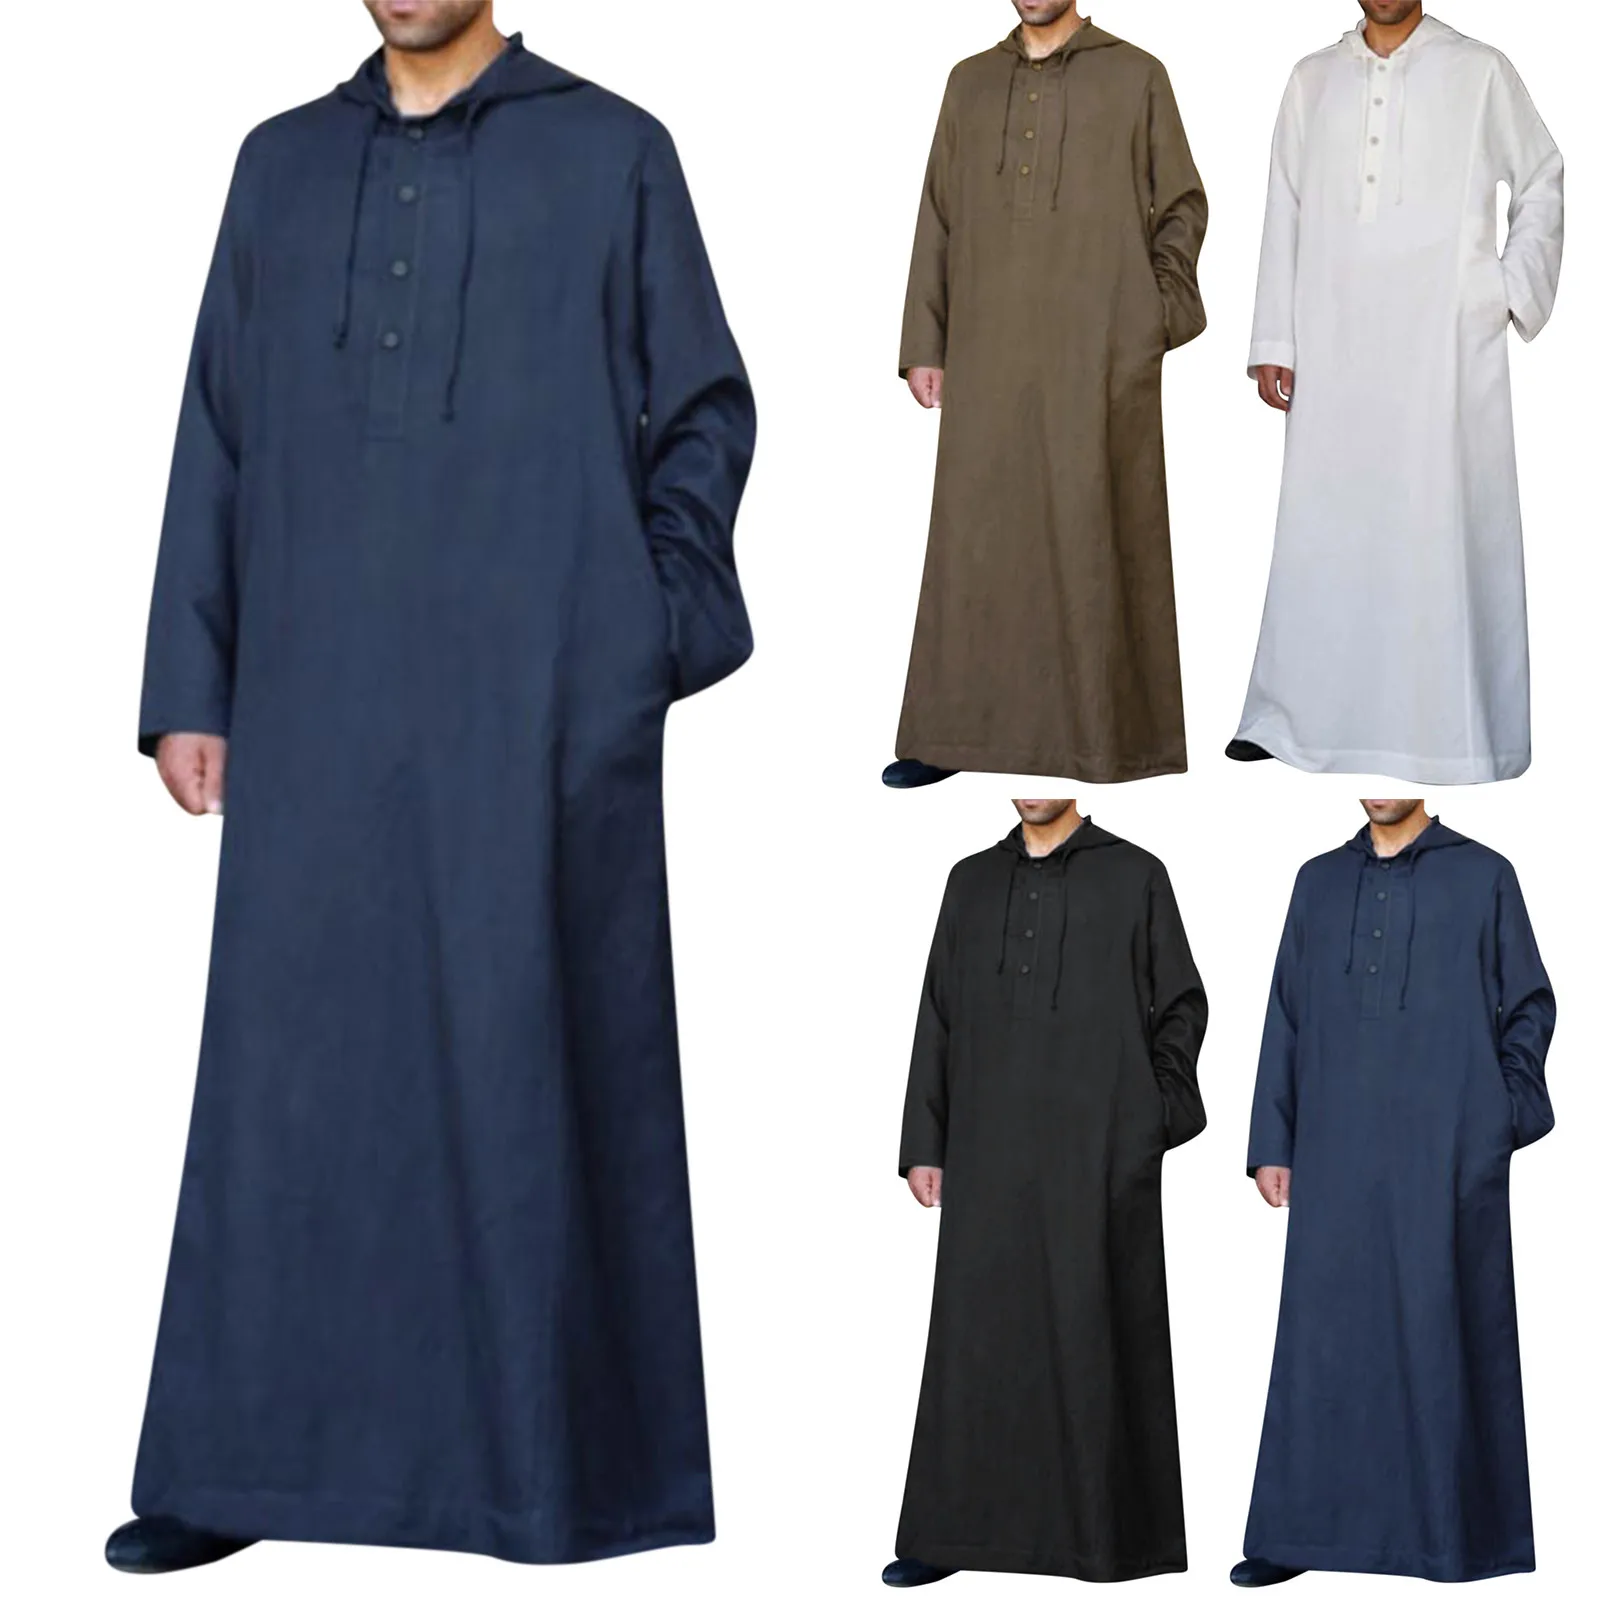 

Muslin Robe Islamic Jubba Thobe Long Sleeve Shirts Hoodies Saudi Arab Kaftan Long Men Abaya Clothing Dubai Hoodies Robe